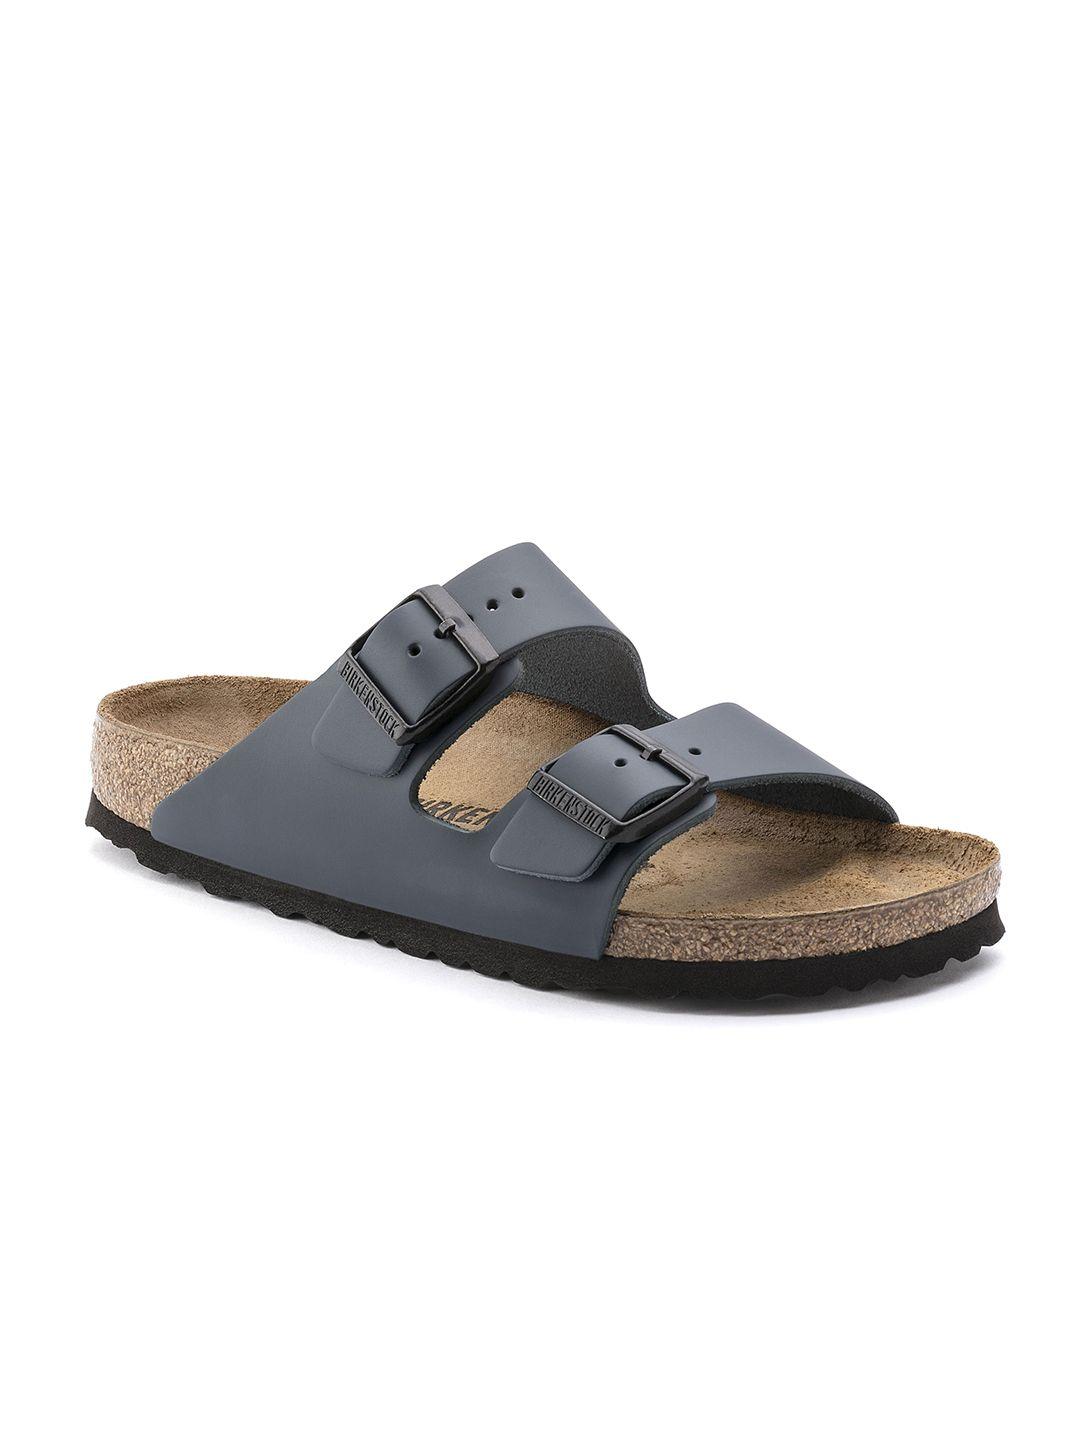 birkenstock unisex navy blue regular width solid arizona natural leather comfort sandals